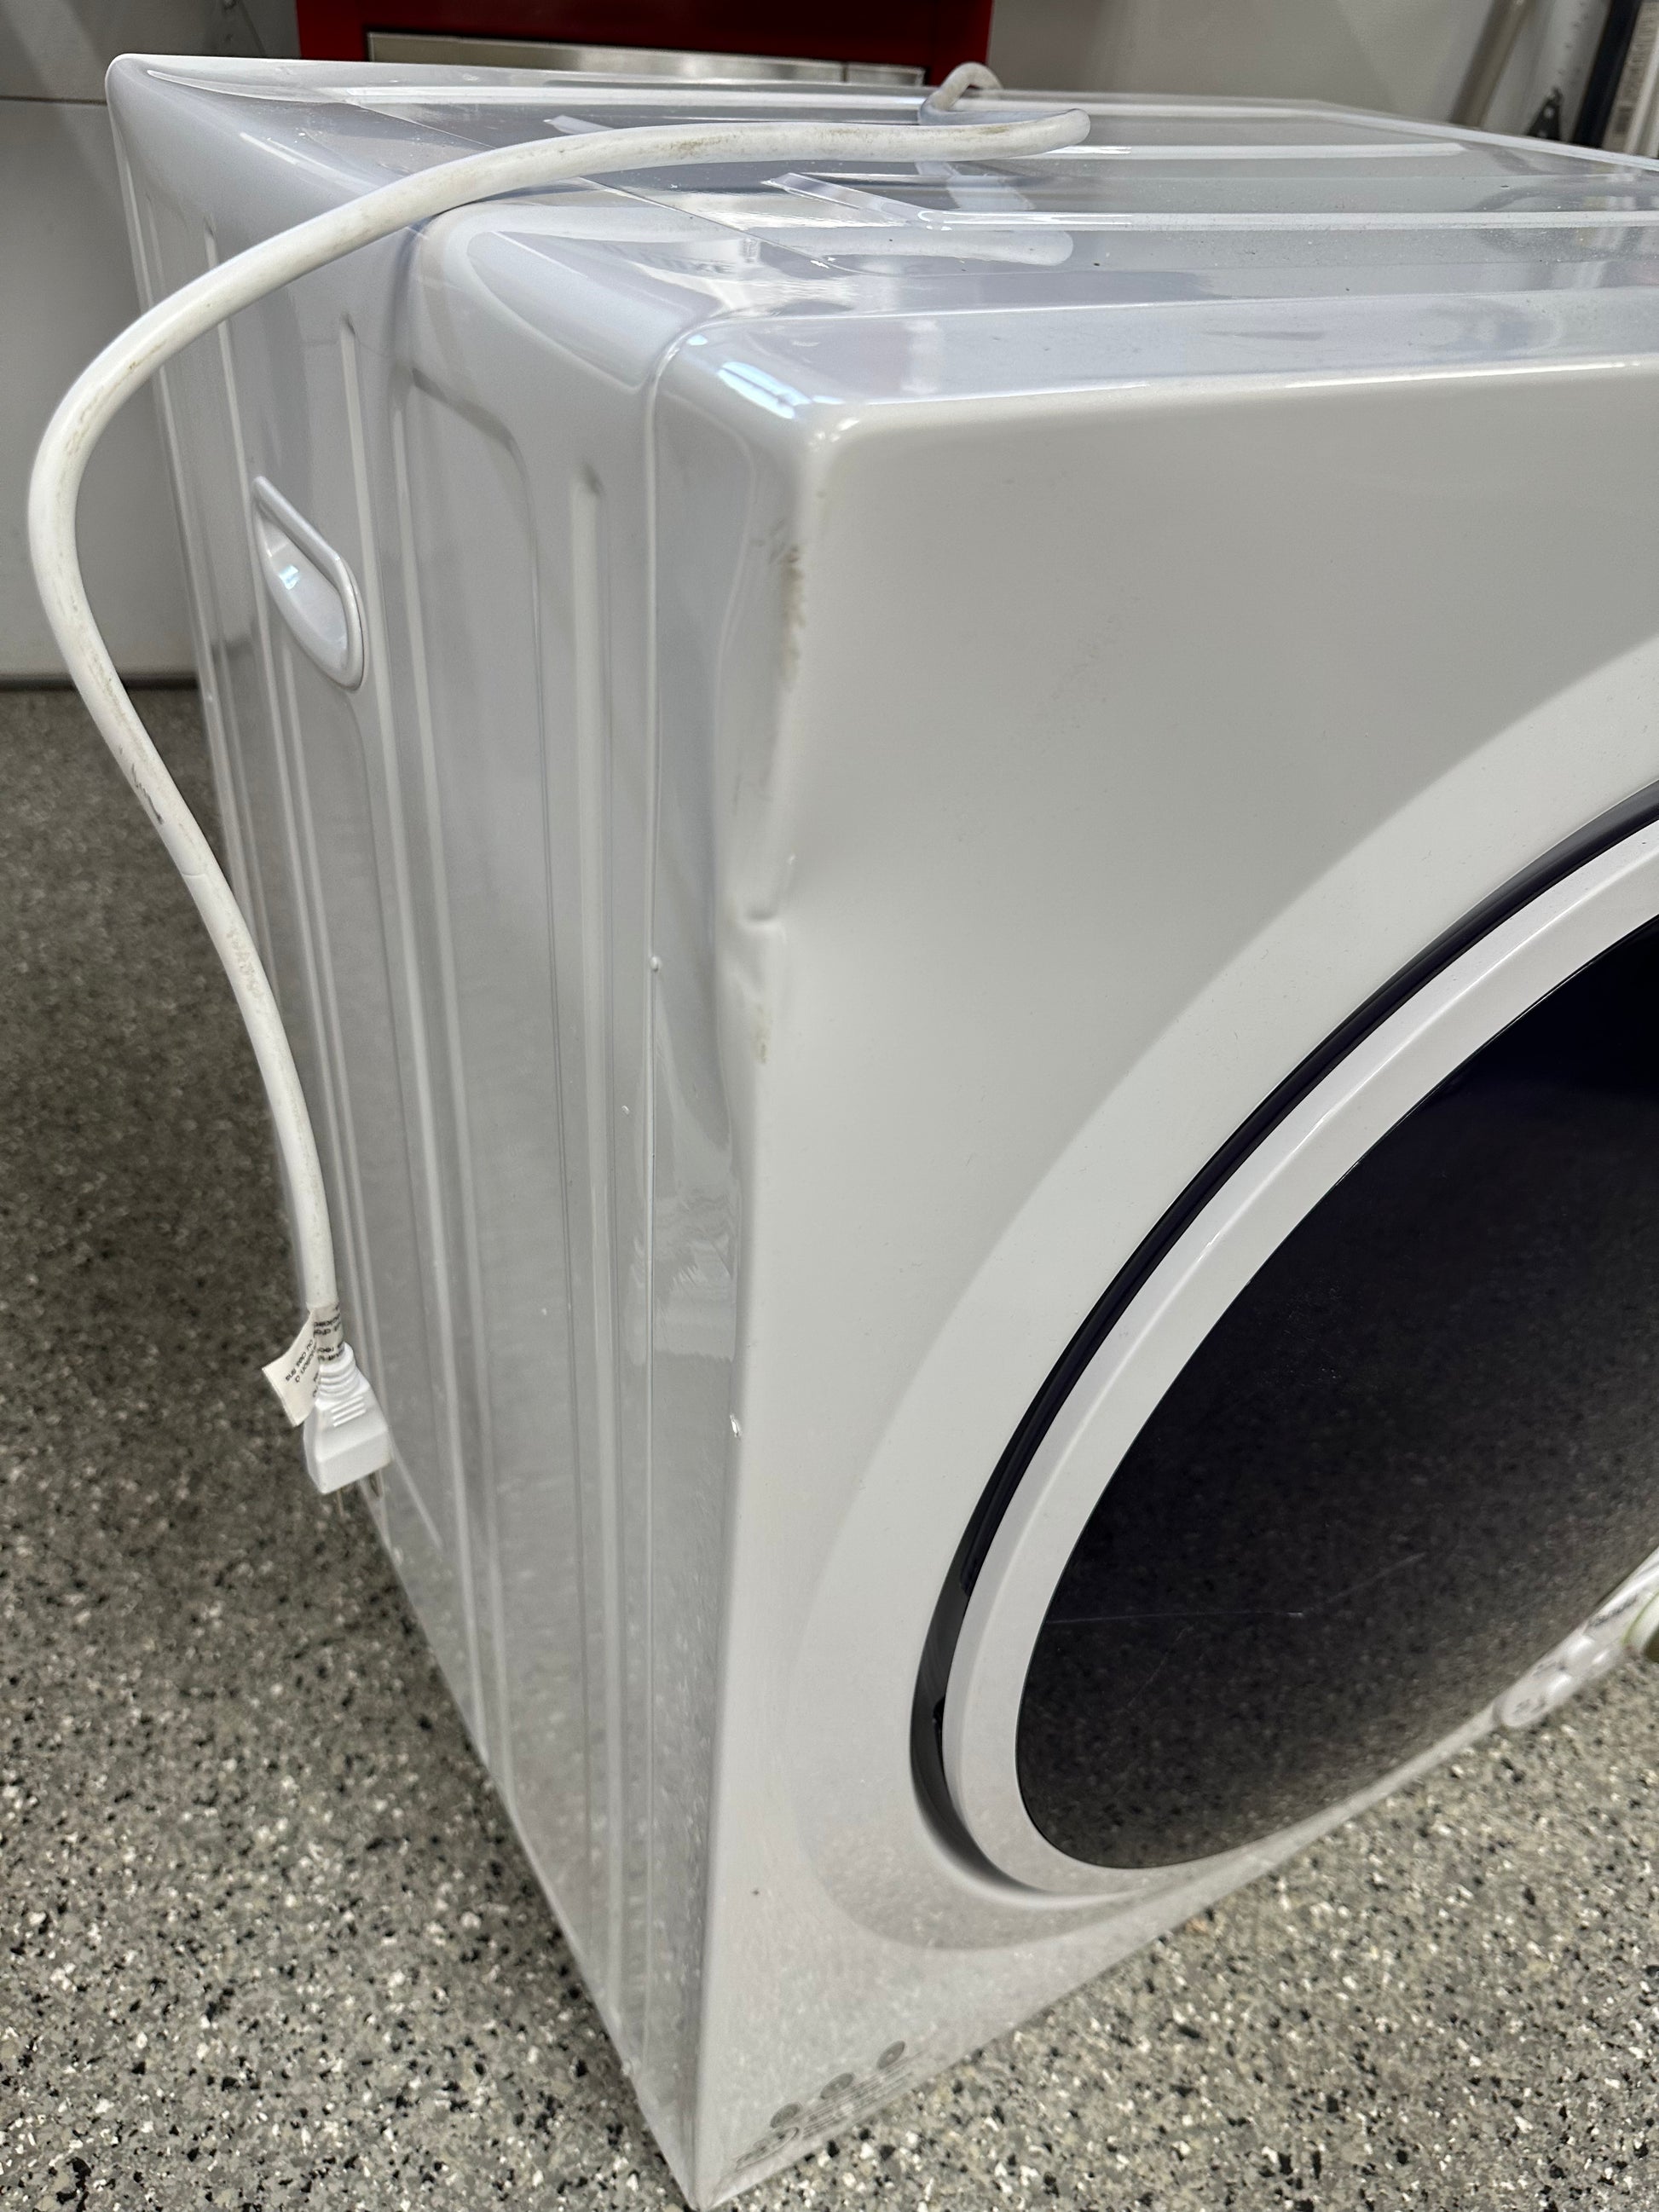 Panda 3.5 Cu.Ft White Compact Portable Electric Laundry Dryer Pan875W, 13  Lbs Capacity, 120-Volt Sensor Dryer